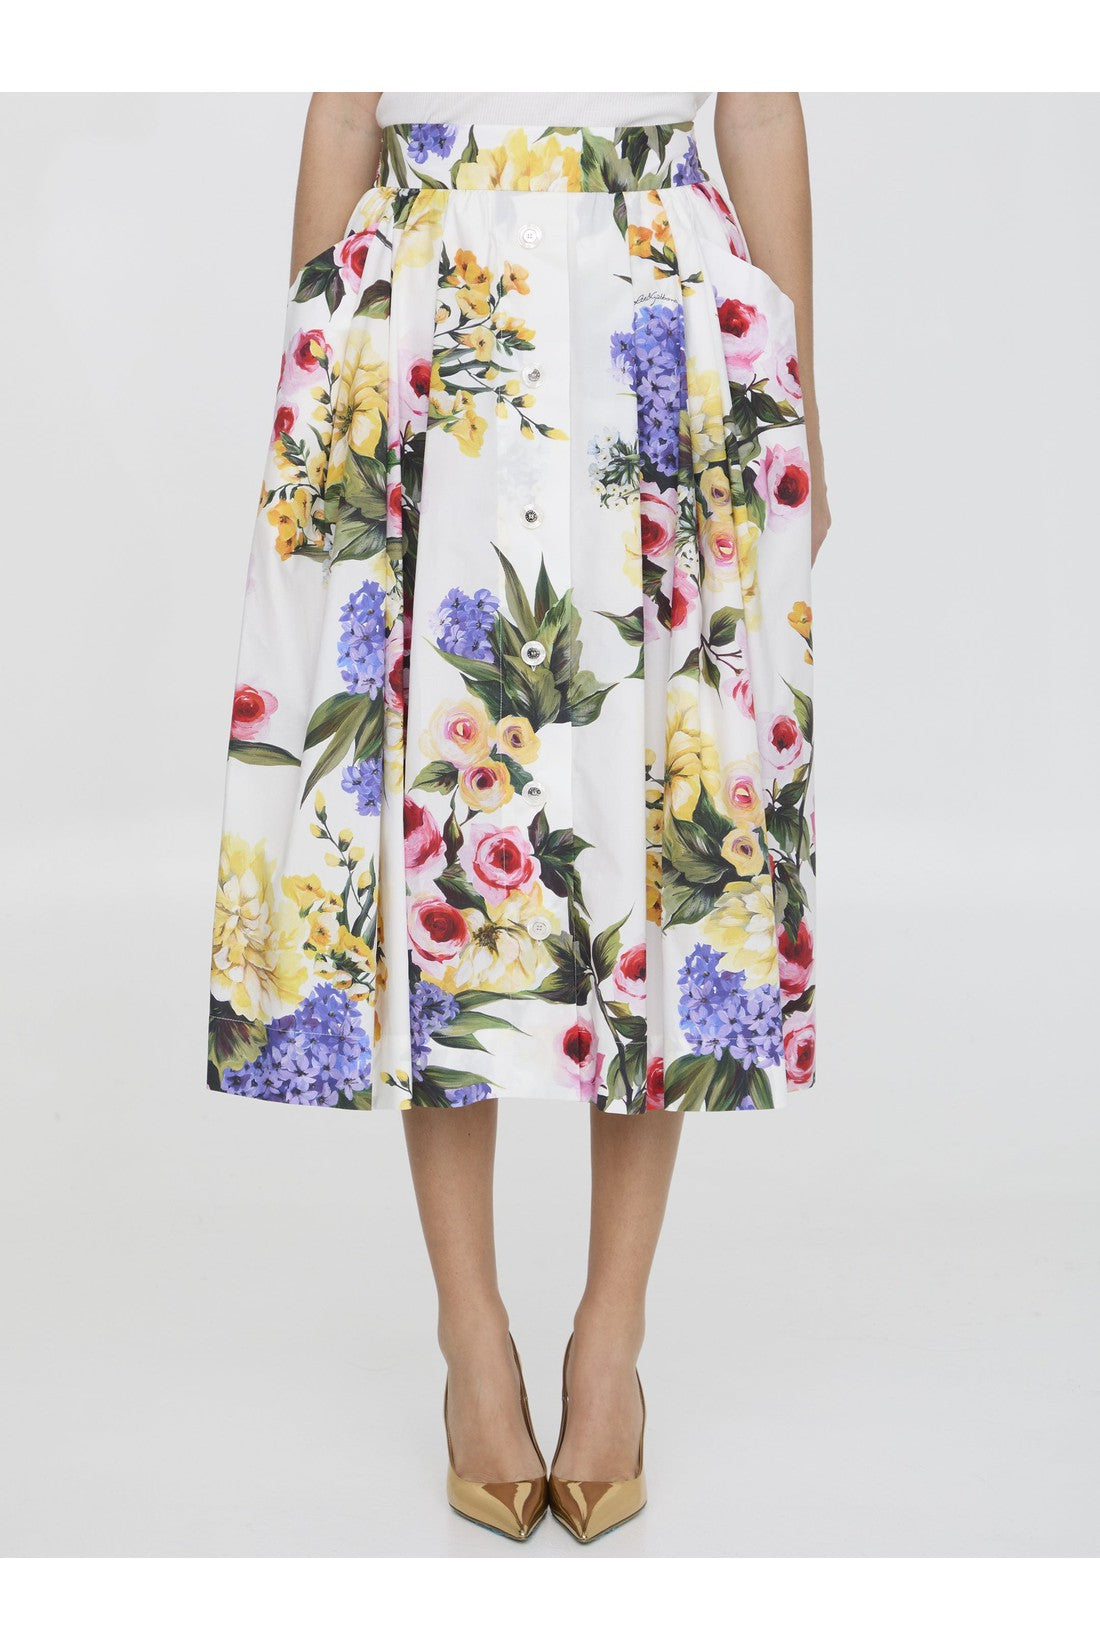 Garden-print skirt